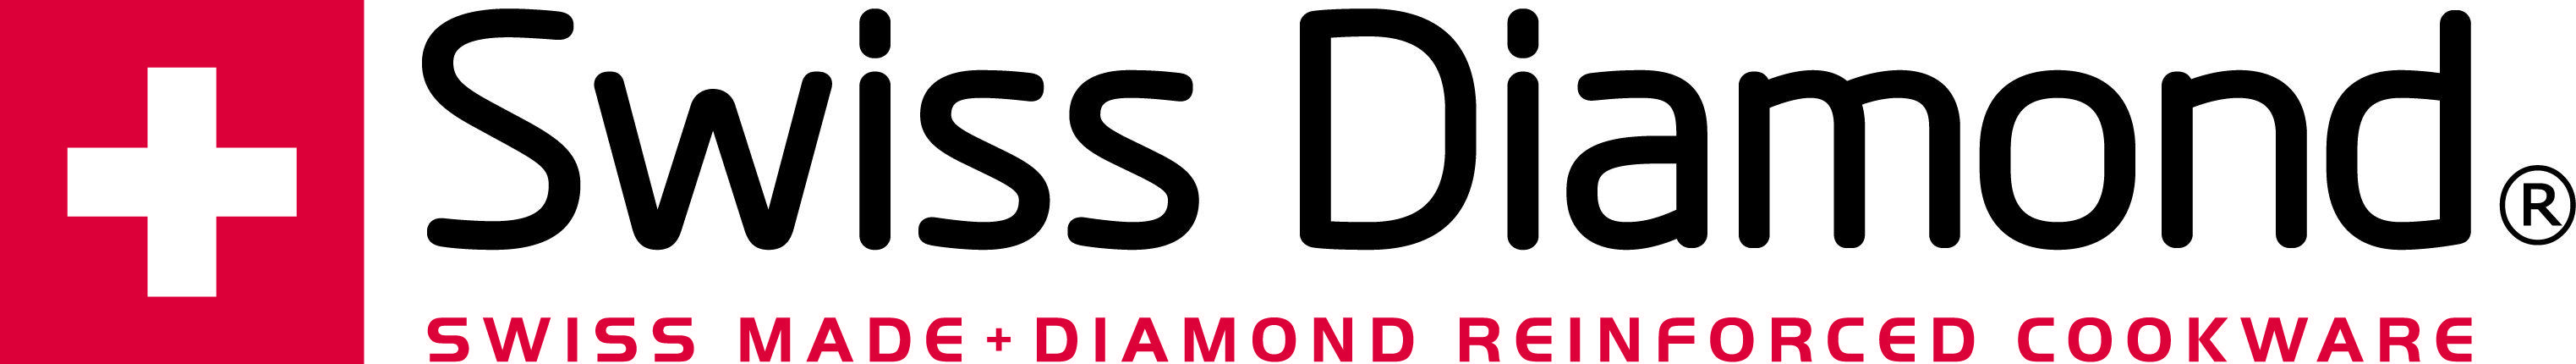 Swiss Diamond Logo - SWISS DIAMOND GALLERY